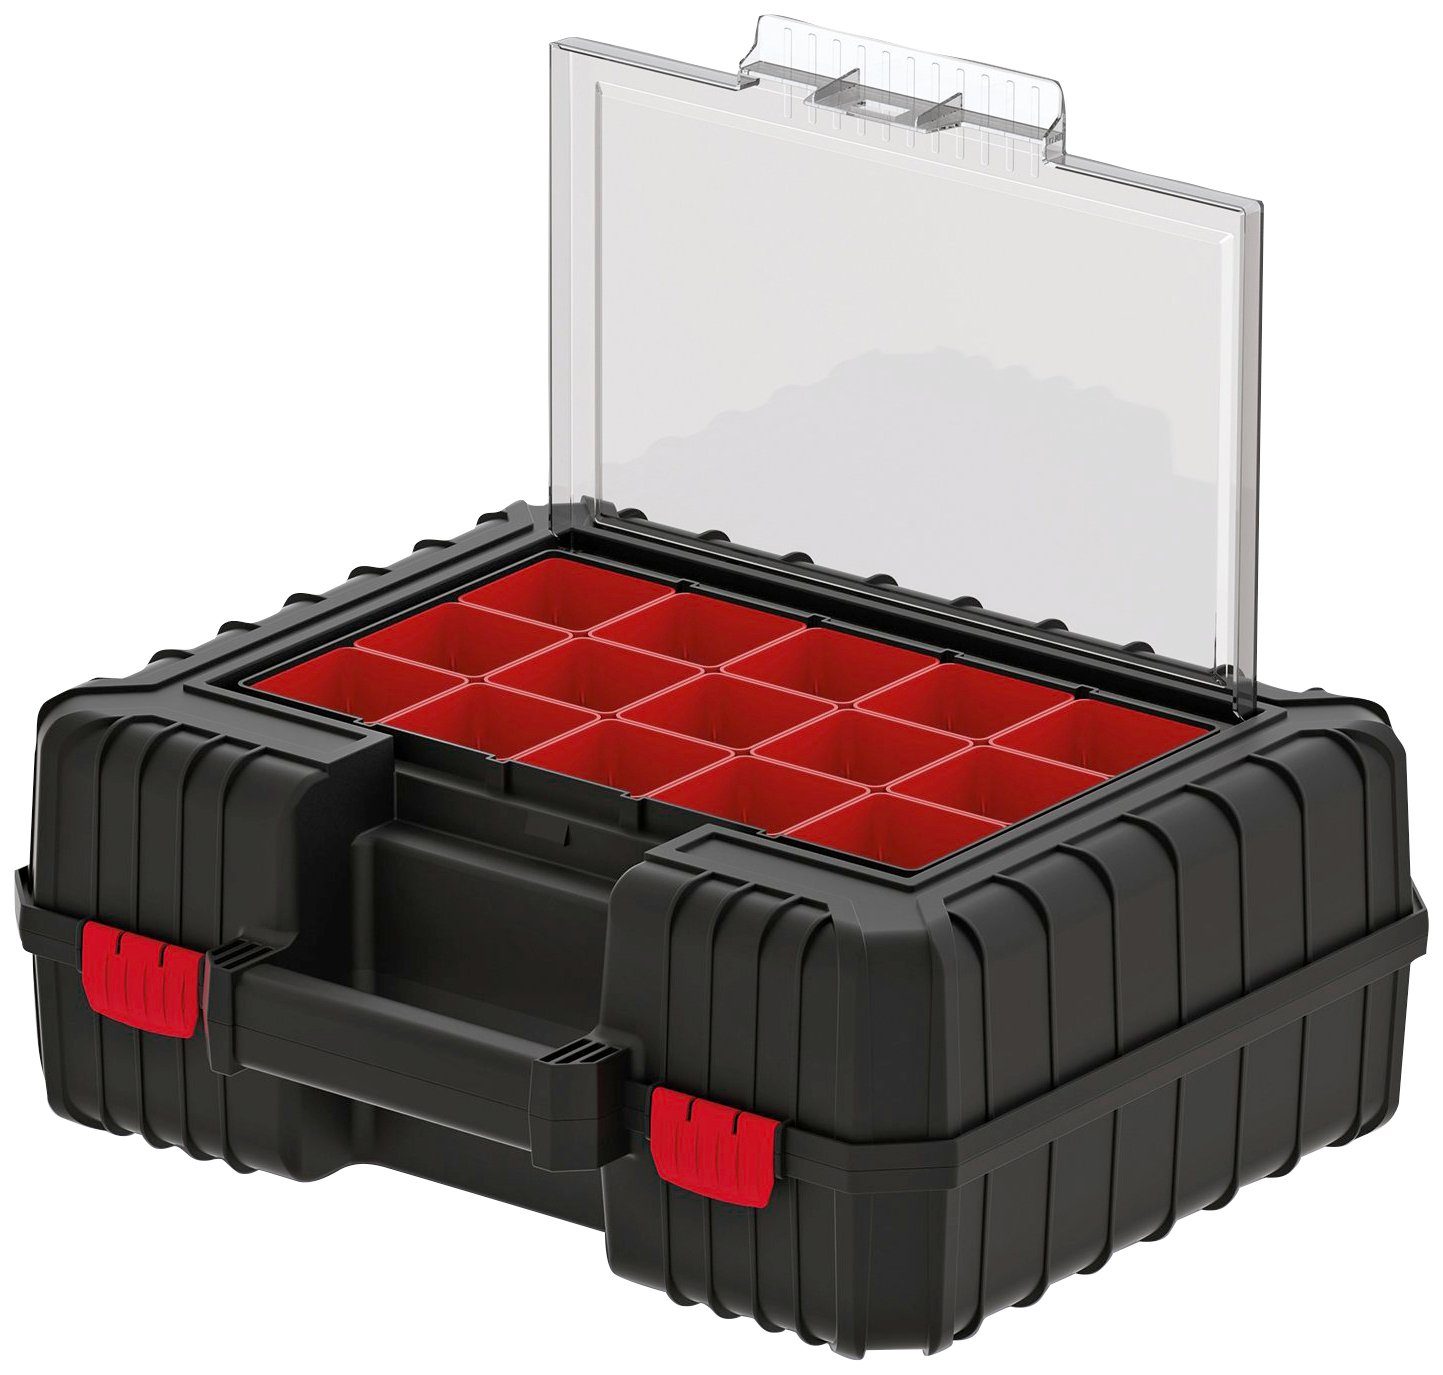 Prosperplast Werkzeugbox HEAVY, 38,4 x 33,5 x 14,4 kg, Aus Kunststoff